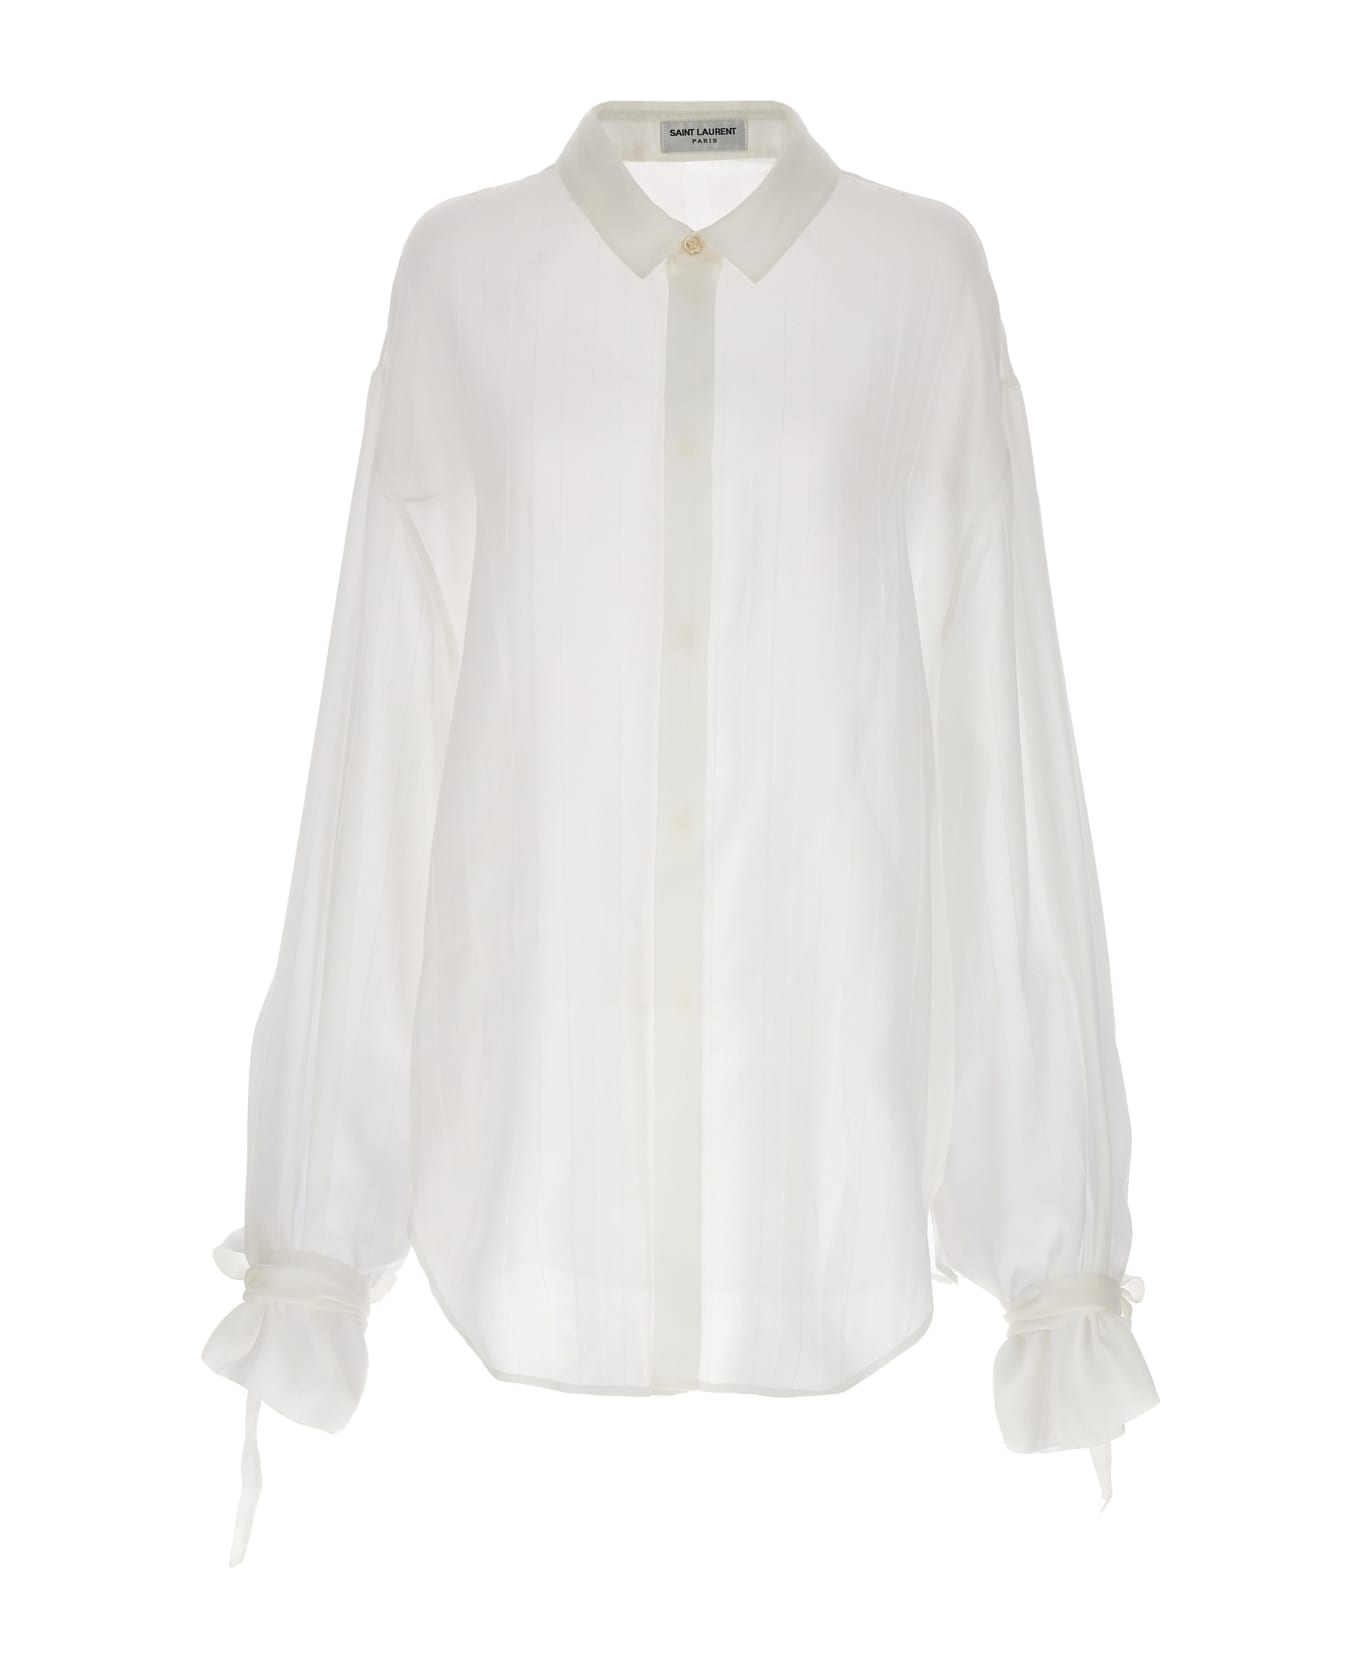 Saint Laurent Striped Silk Shirt - White